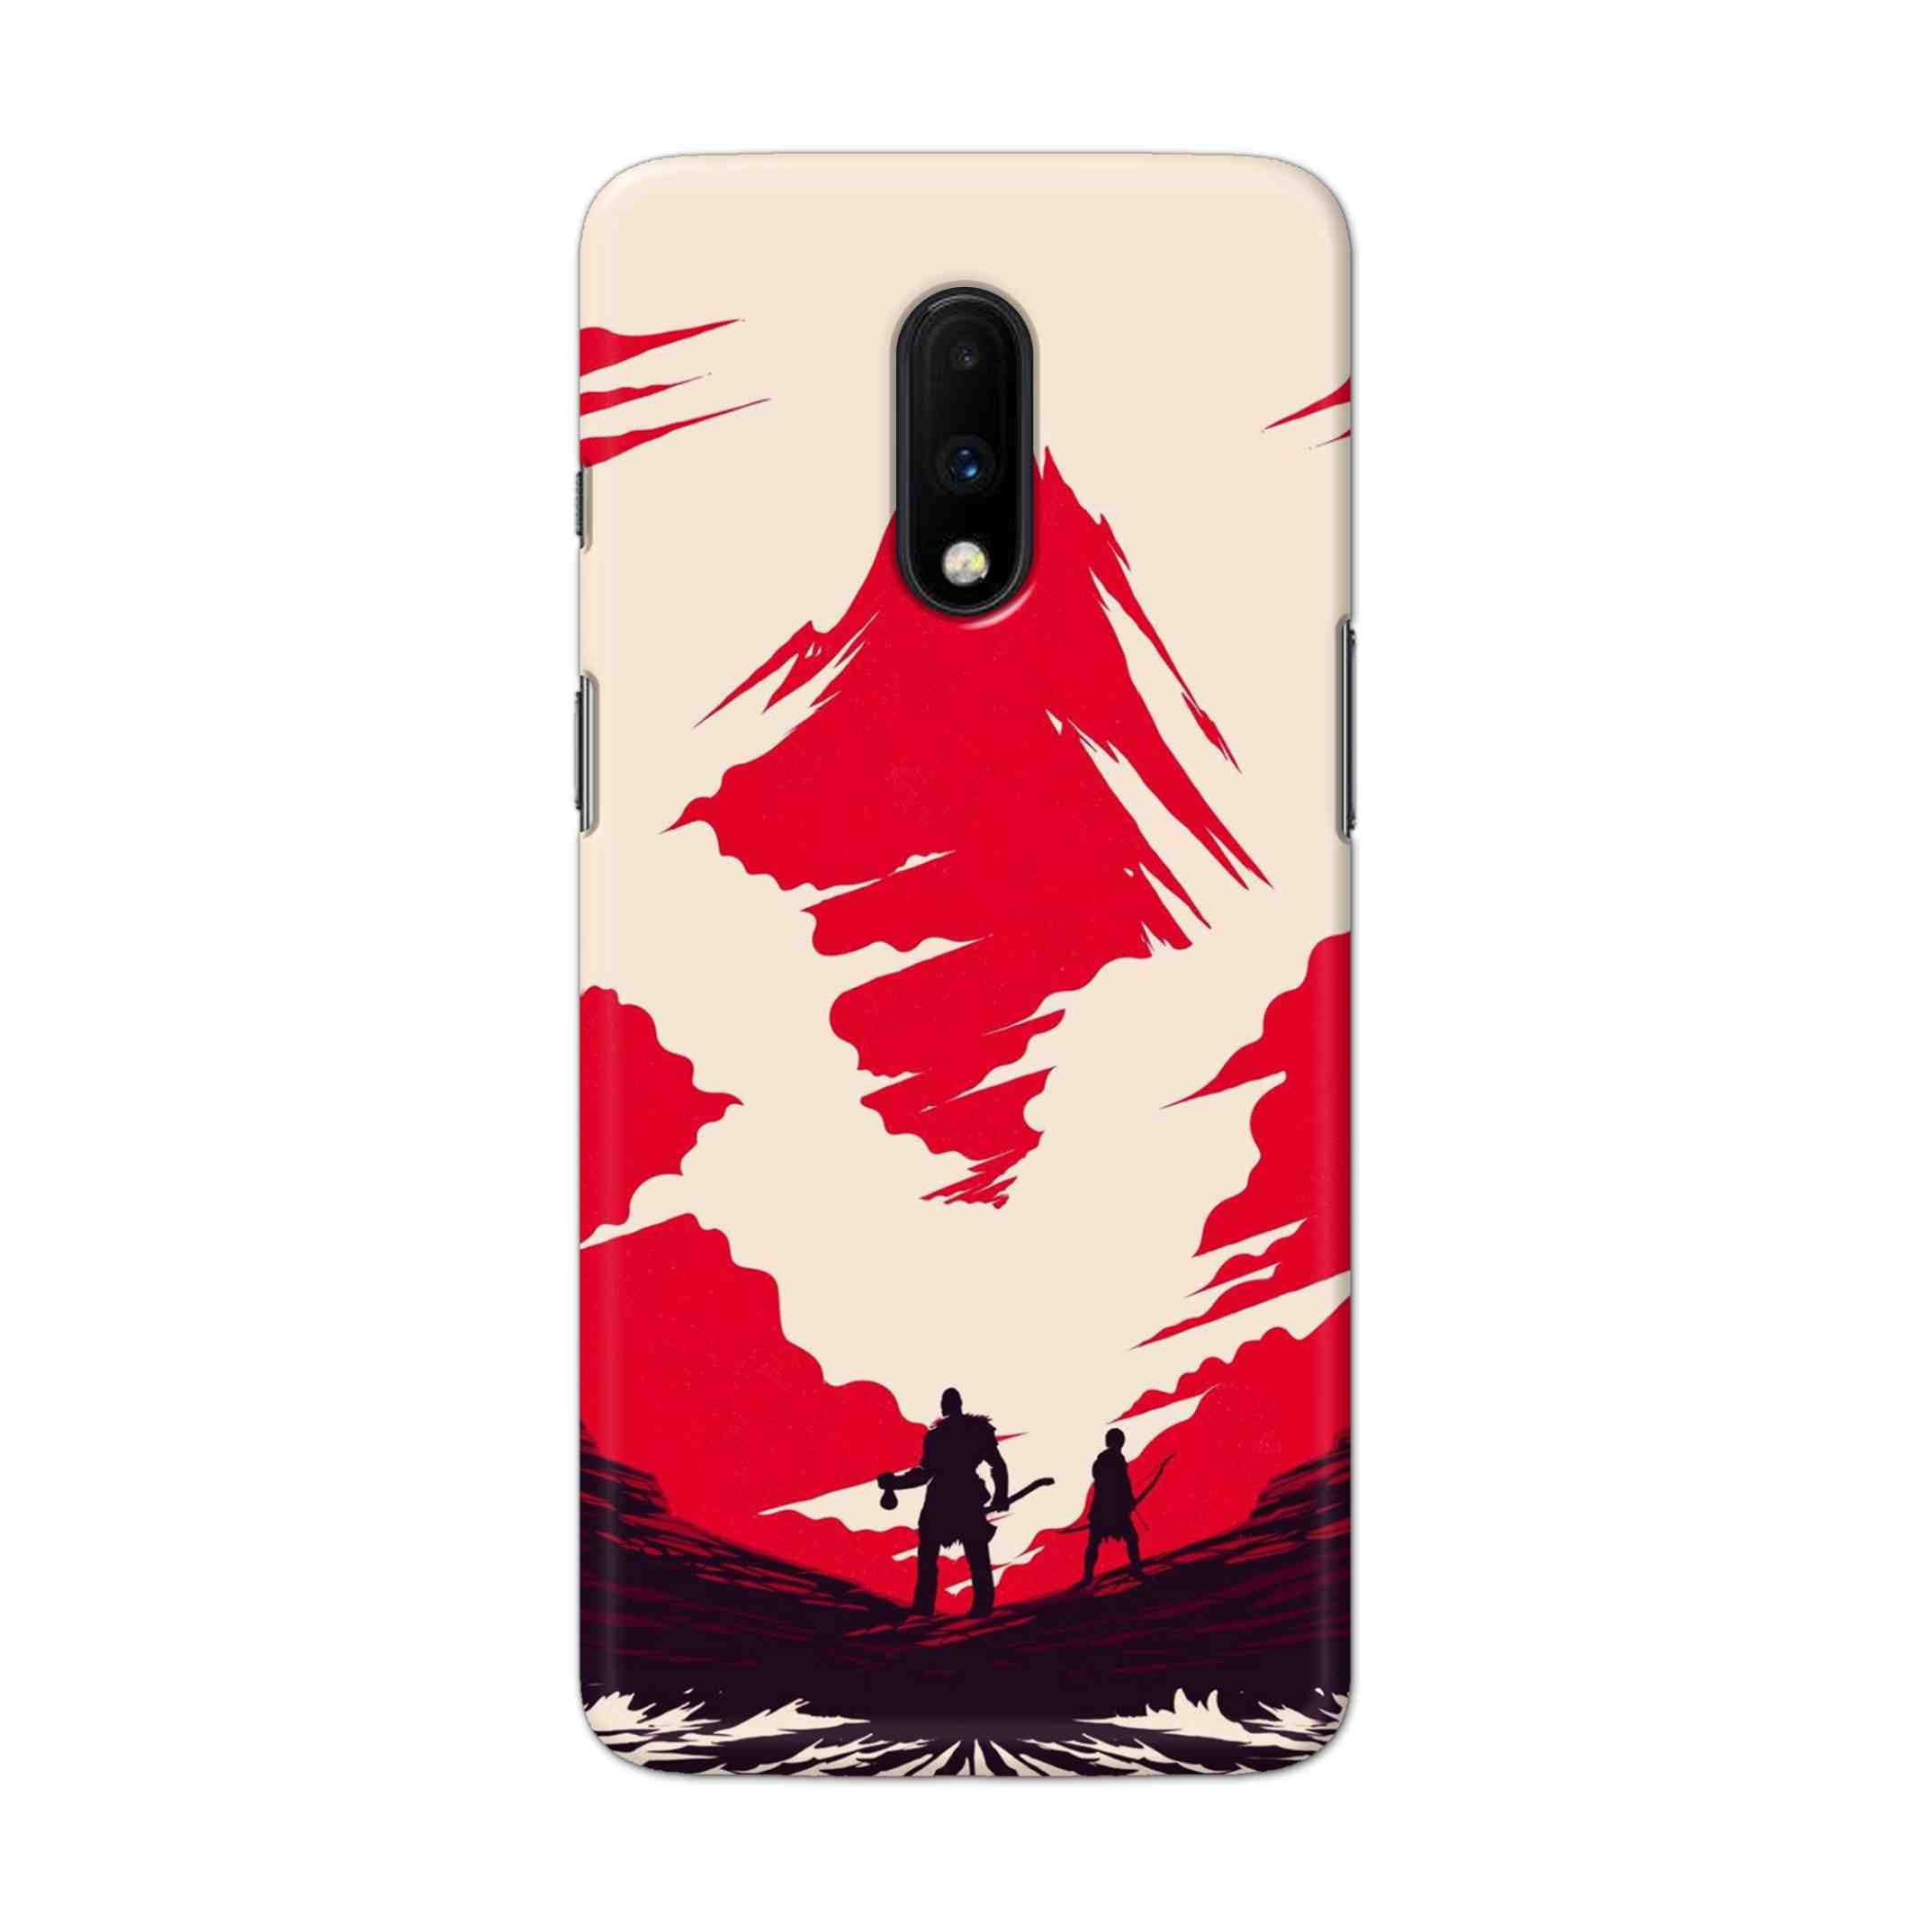 Buy God Of War Art Hard Back Mobile Phone Case Cover For OnePlus 7 Online